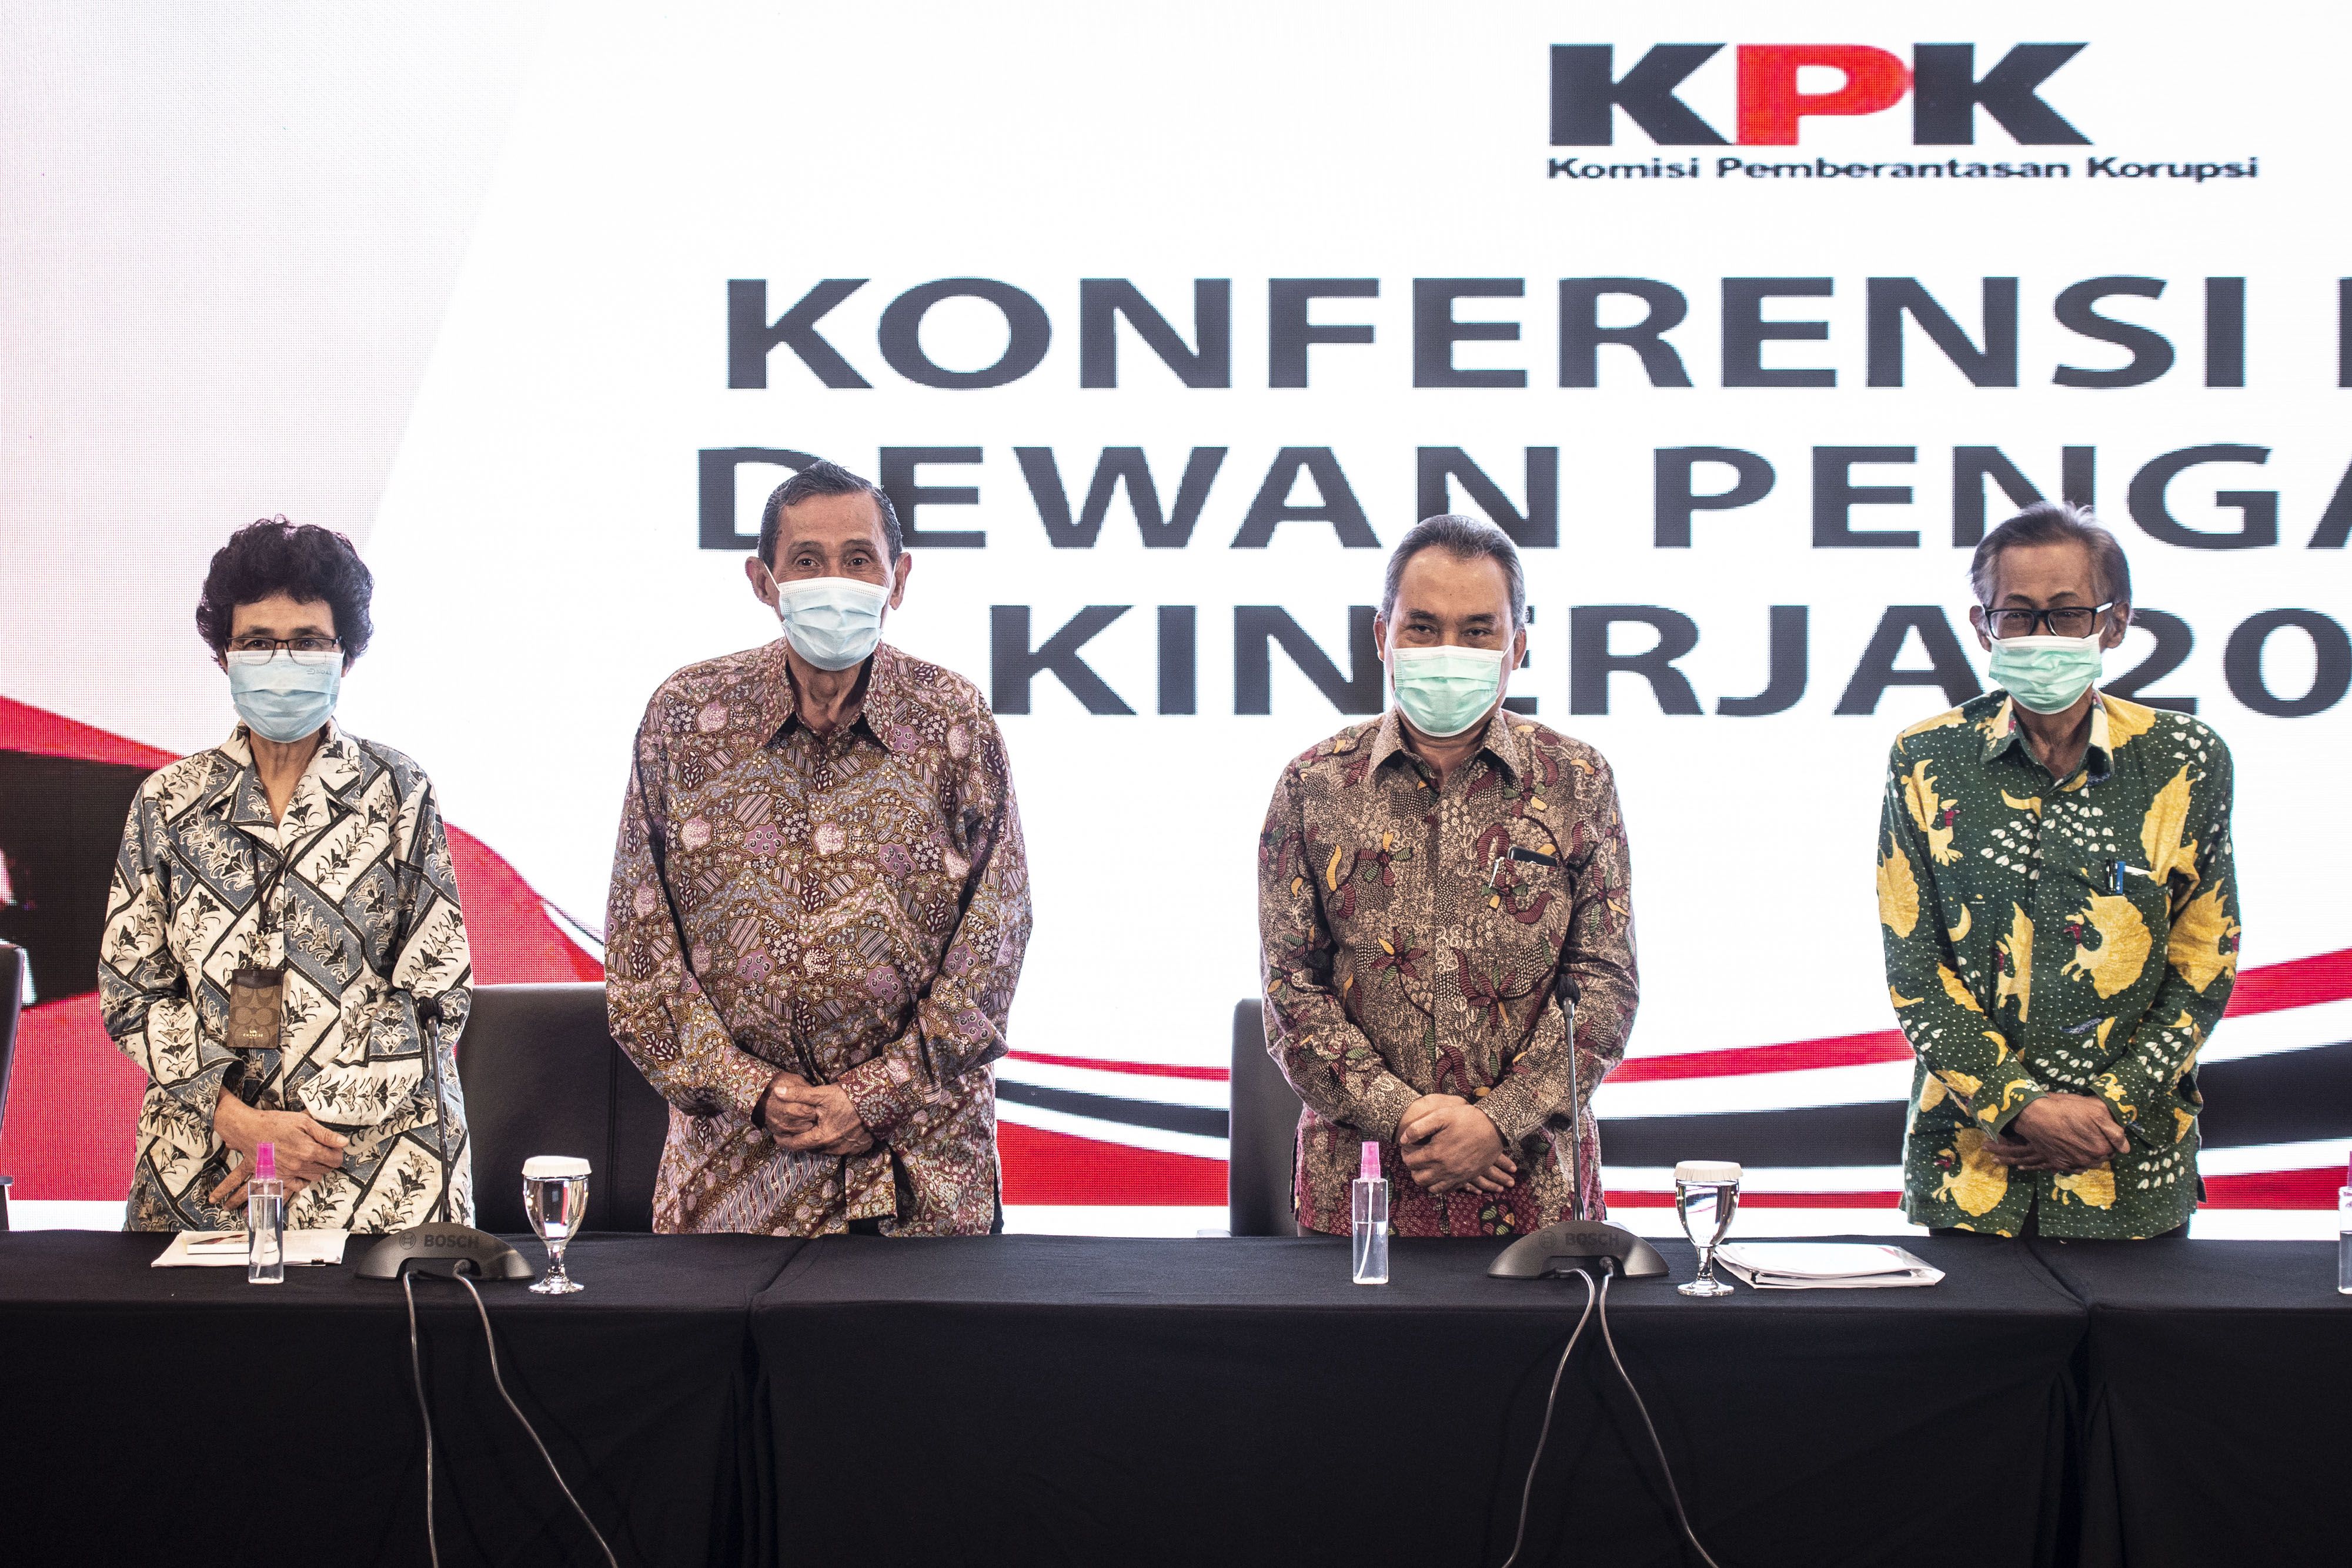 Ketua Dewan Pengawas KPK Tumpak Hatorangan Panggabean (kedua kiri) bersama anggota Dewan Pengawas Syamsuddin Haris (kedua kanan), Artidjo Alkostar (kanan) dan Albertina Ho (kiri) berfoto bersama saat konferensi pers kinerja Dewan Pengawas Komisi Pemberantasan Korupsi (KPK) tahun 2020 di Gedung KPK C1, Jakarta, Kamis (7/1/2021). Dewan Pengawas KPK sepanjang 2020 telah menerima dan menindaklanjuti 247 surat pengaduan masyarakat atas pelaksanaan tugas dan wewenang KPK. ANTARA FOTO/Aprillio Akbar/aw